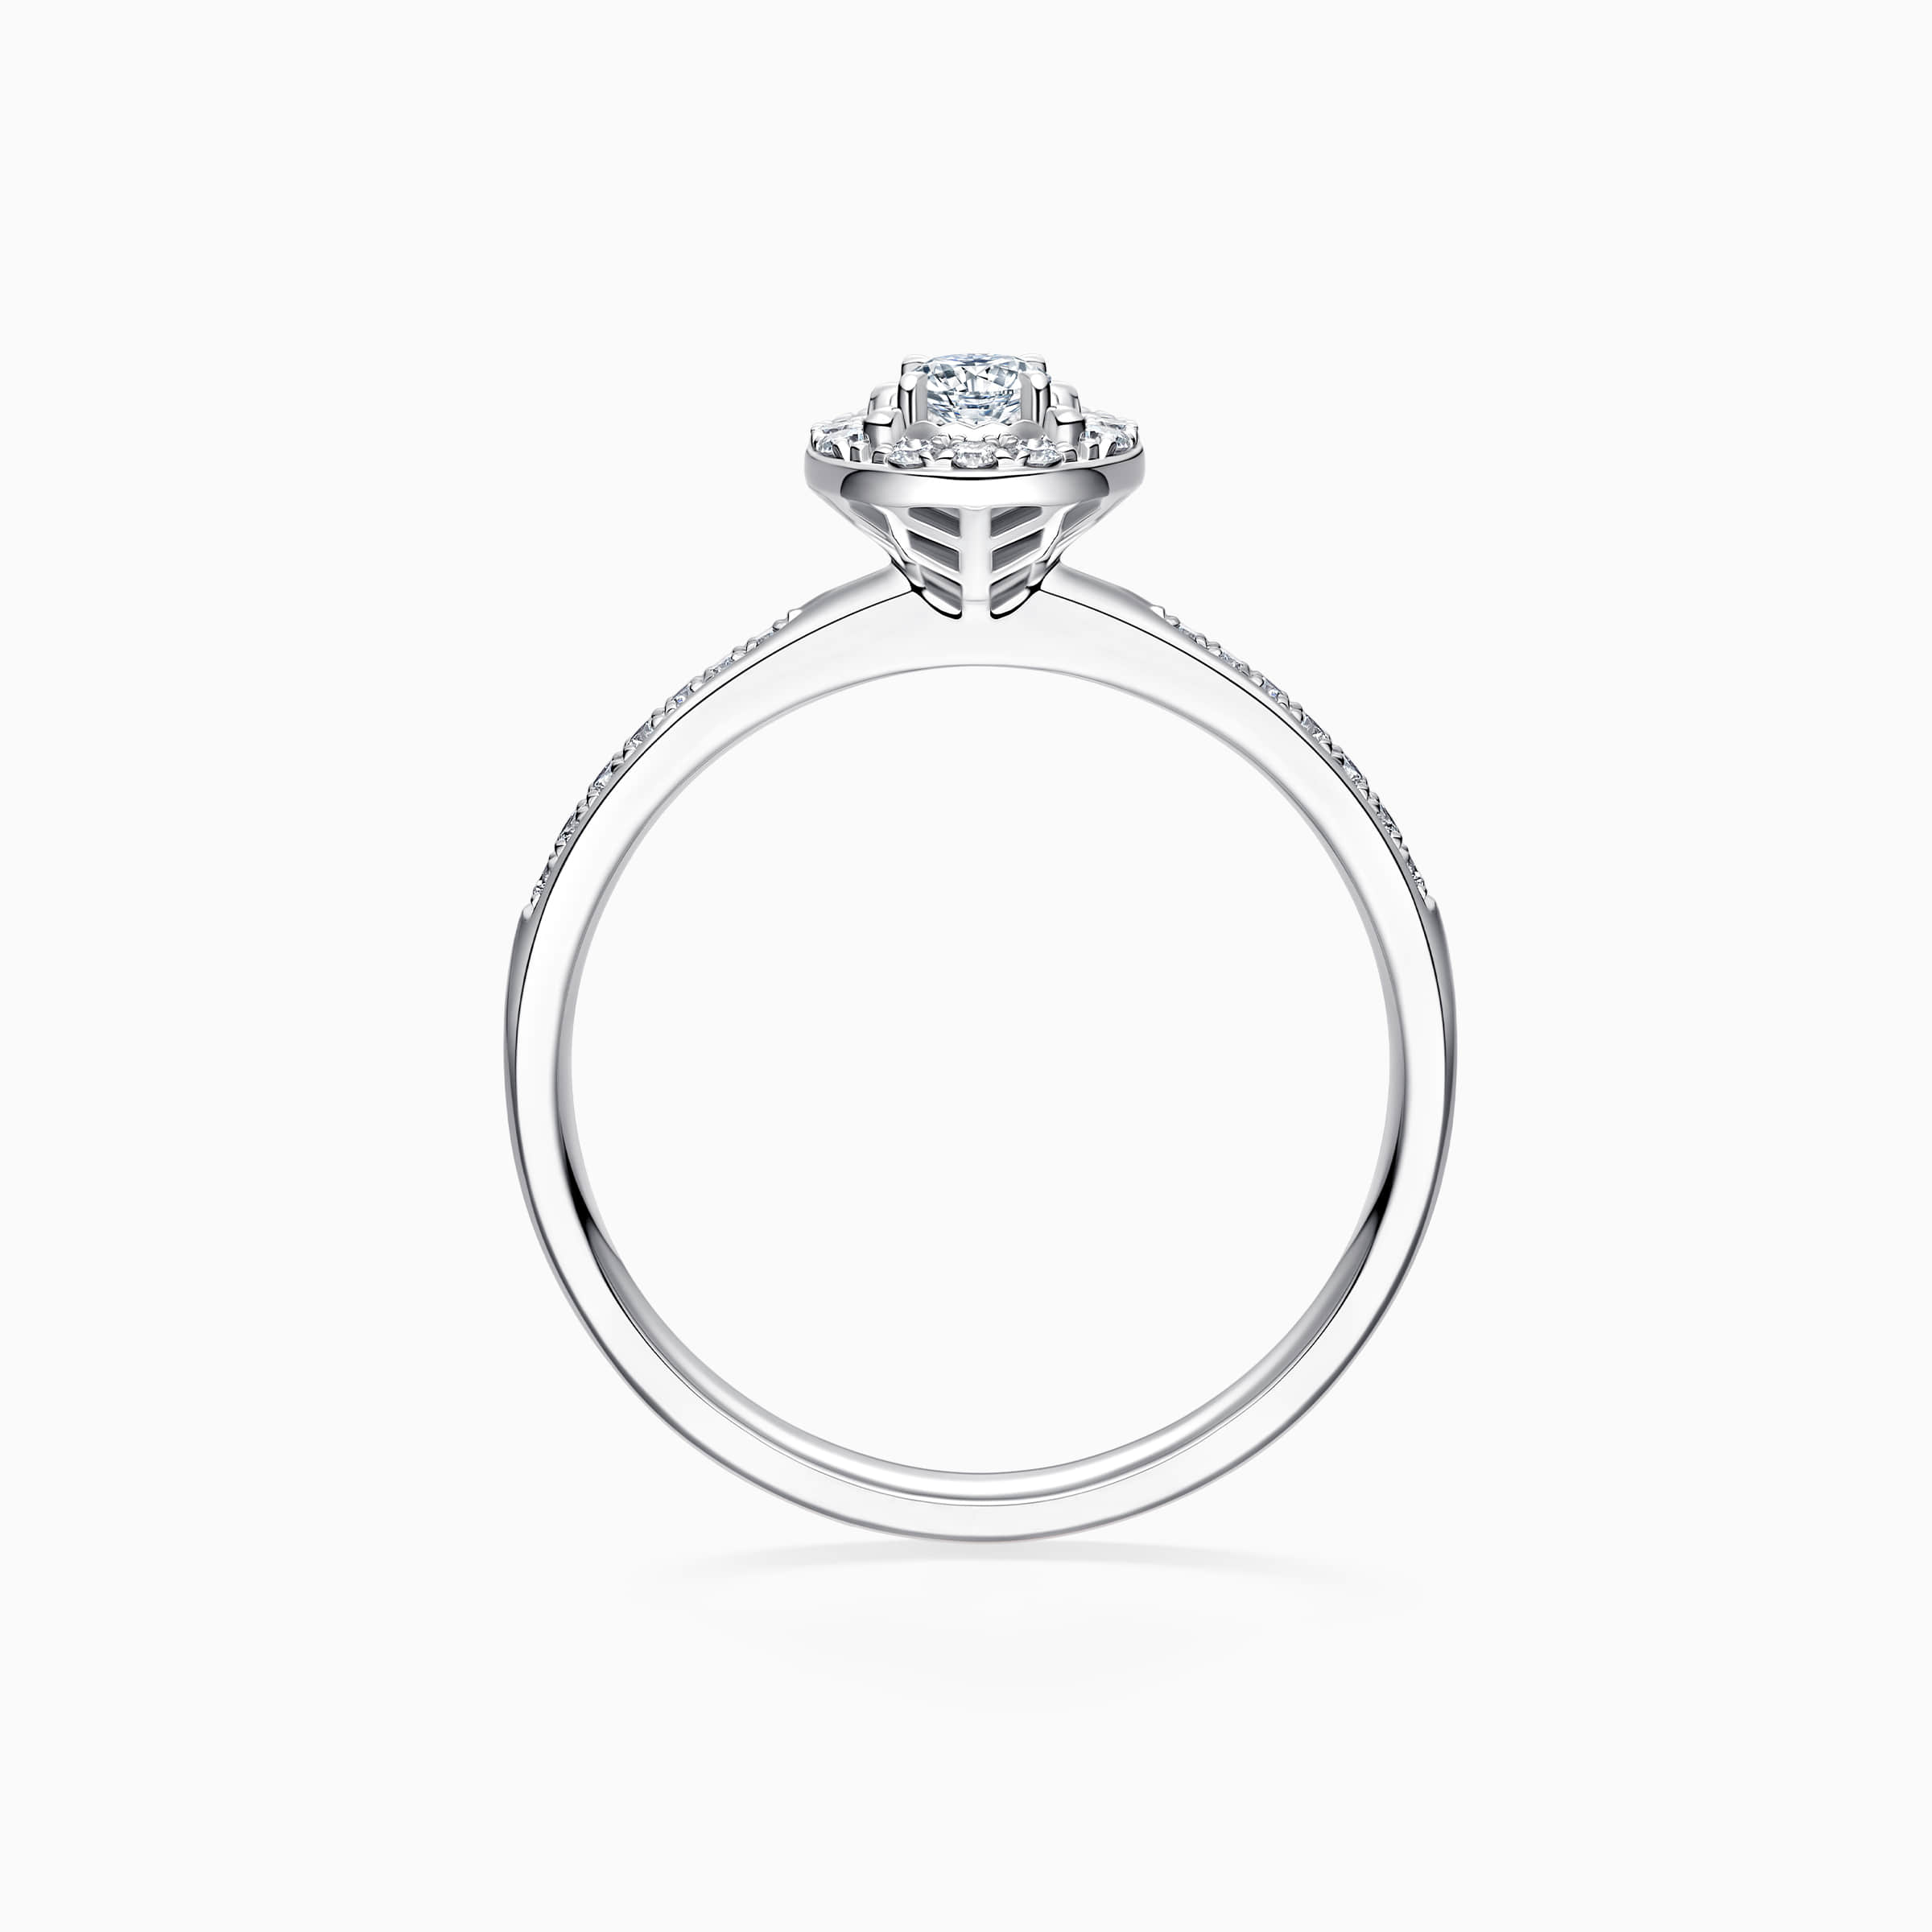 DR Engagement RingsDR PAIRSseries Simple luxury Propose diamond ringA ...